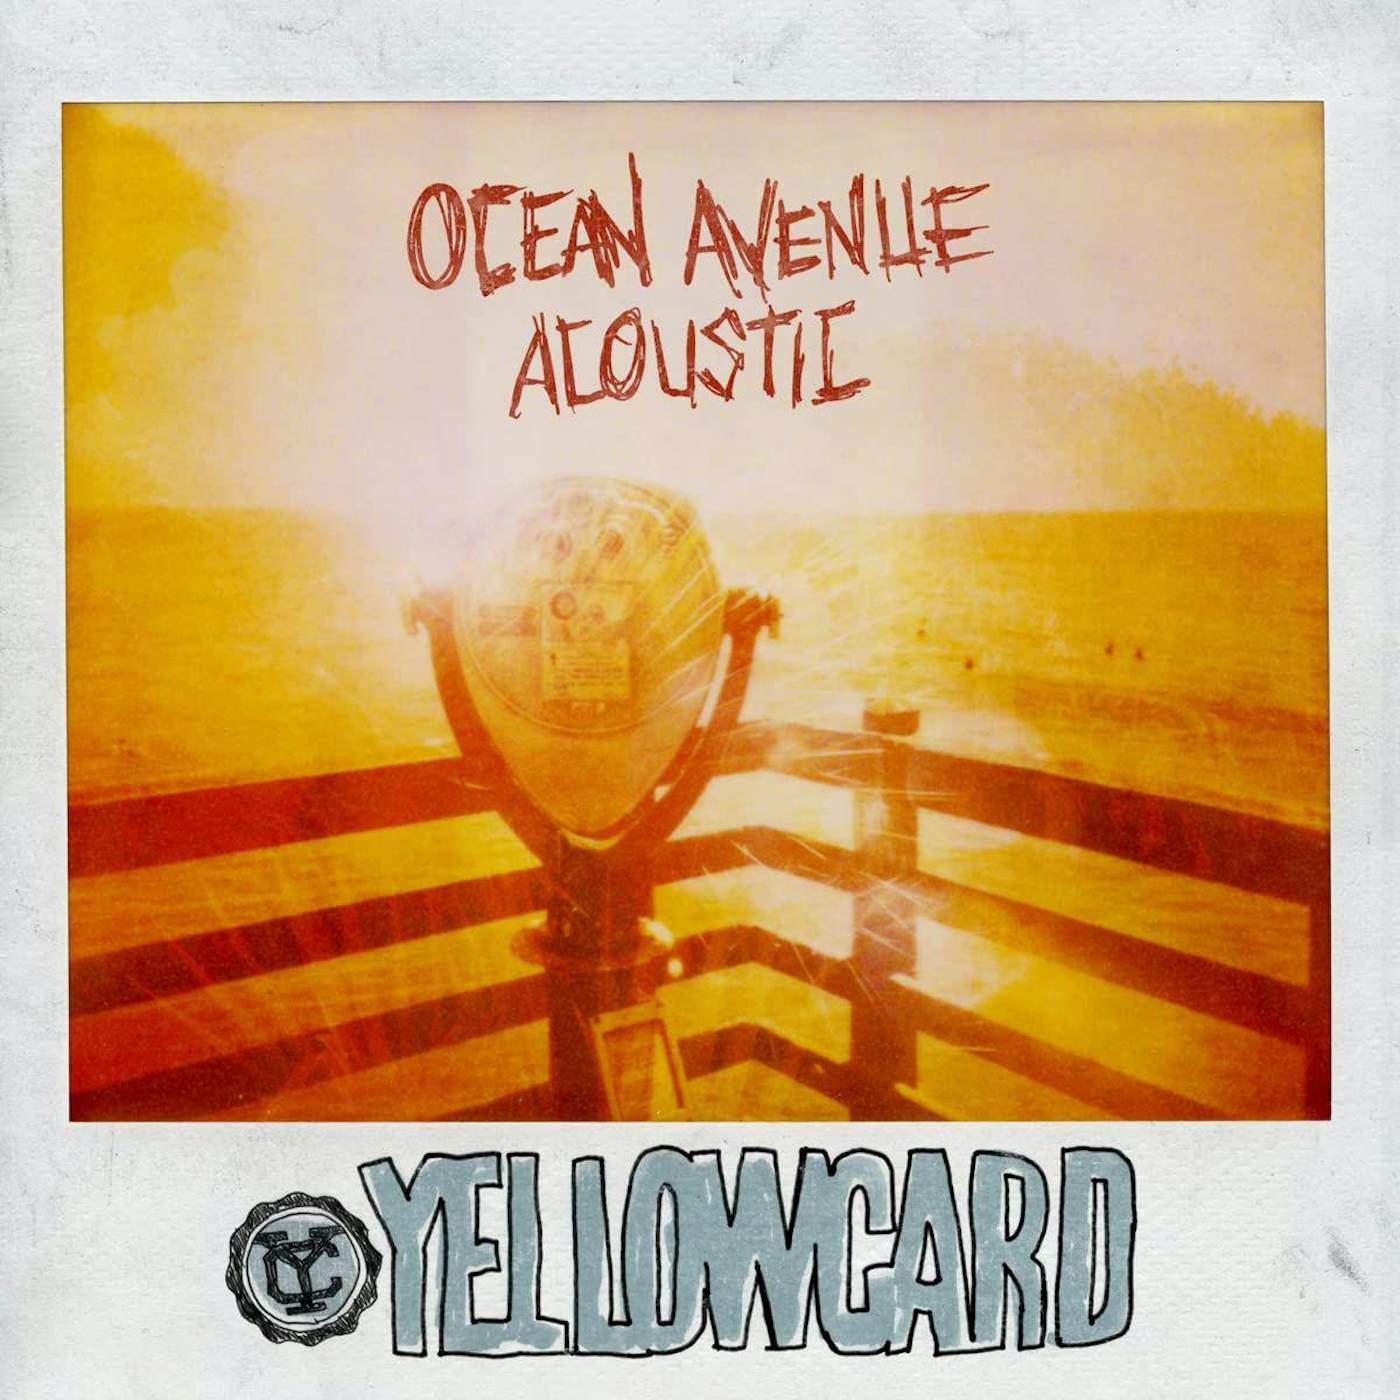 Yellowcard Ocean Avenue Acoustic (Orange) Vinyl Record